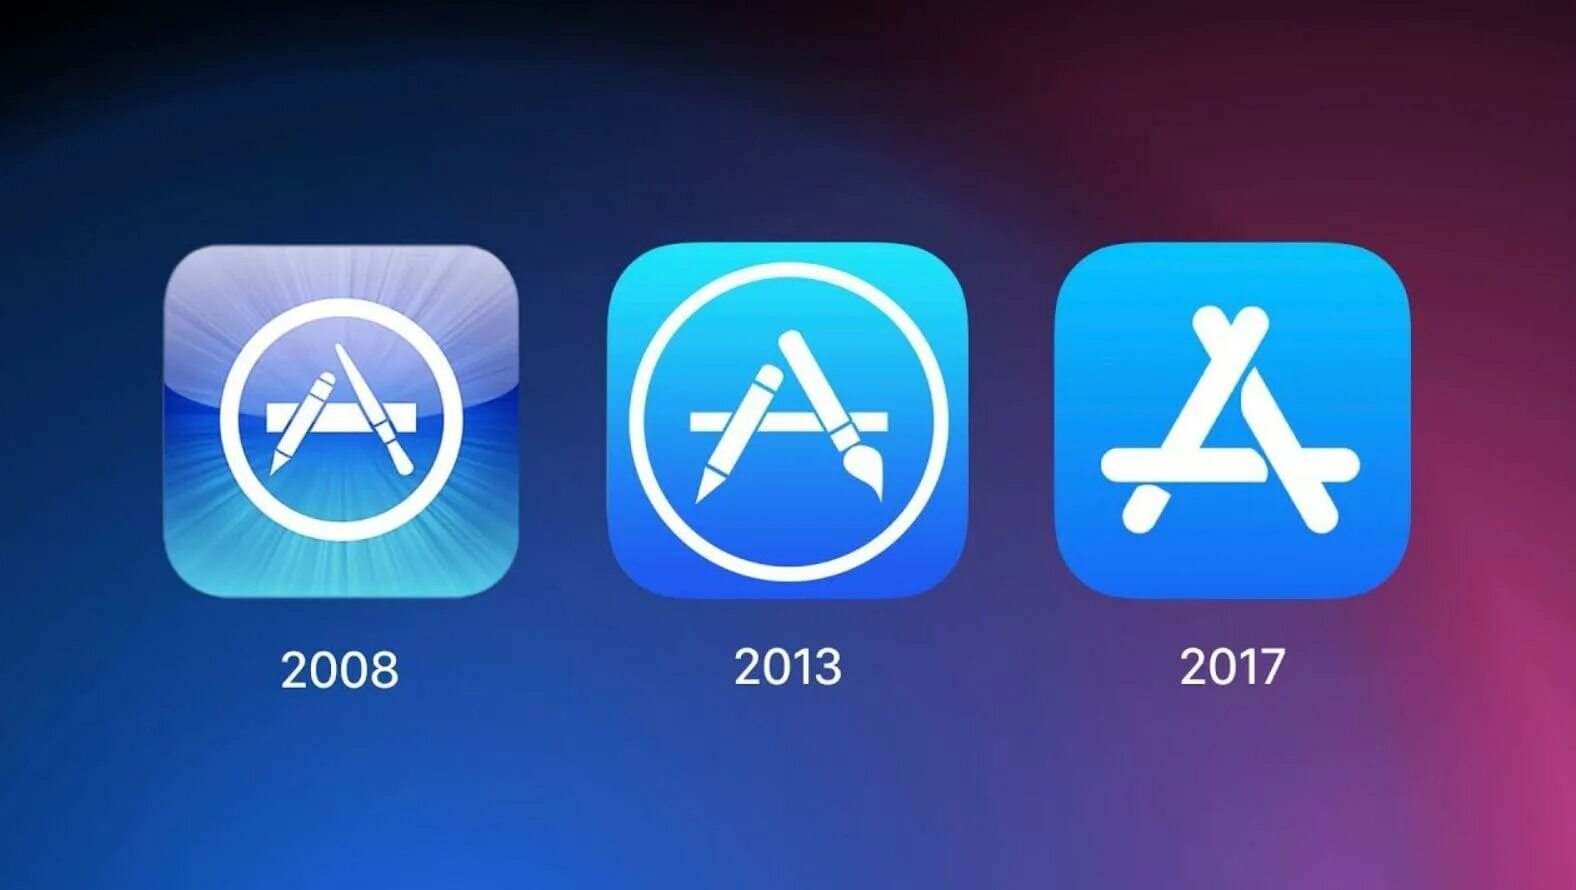 App store videos. App Store. App Store 2008. Amazing приложение. Рабочий стол аппсторе.